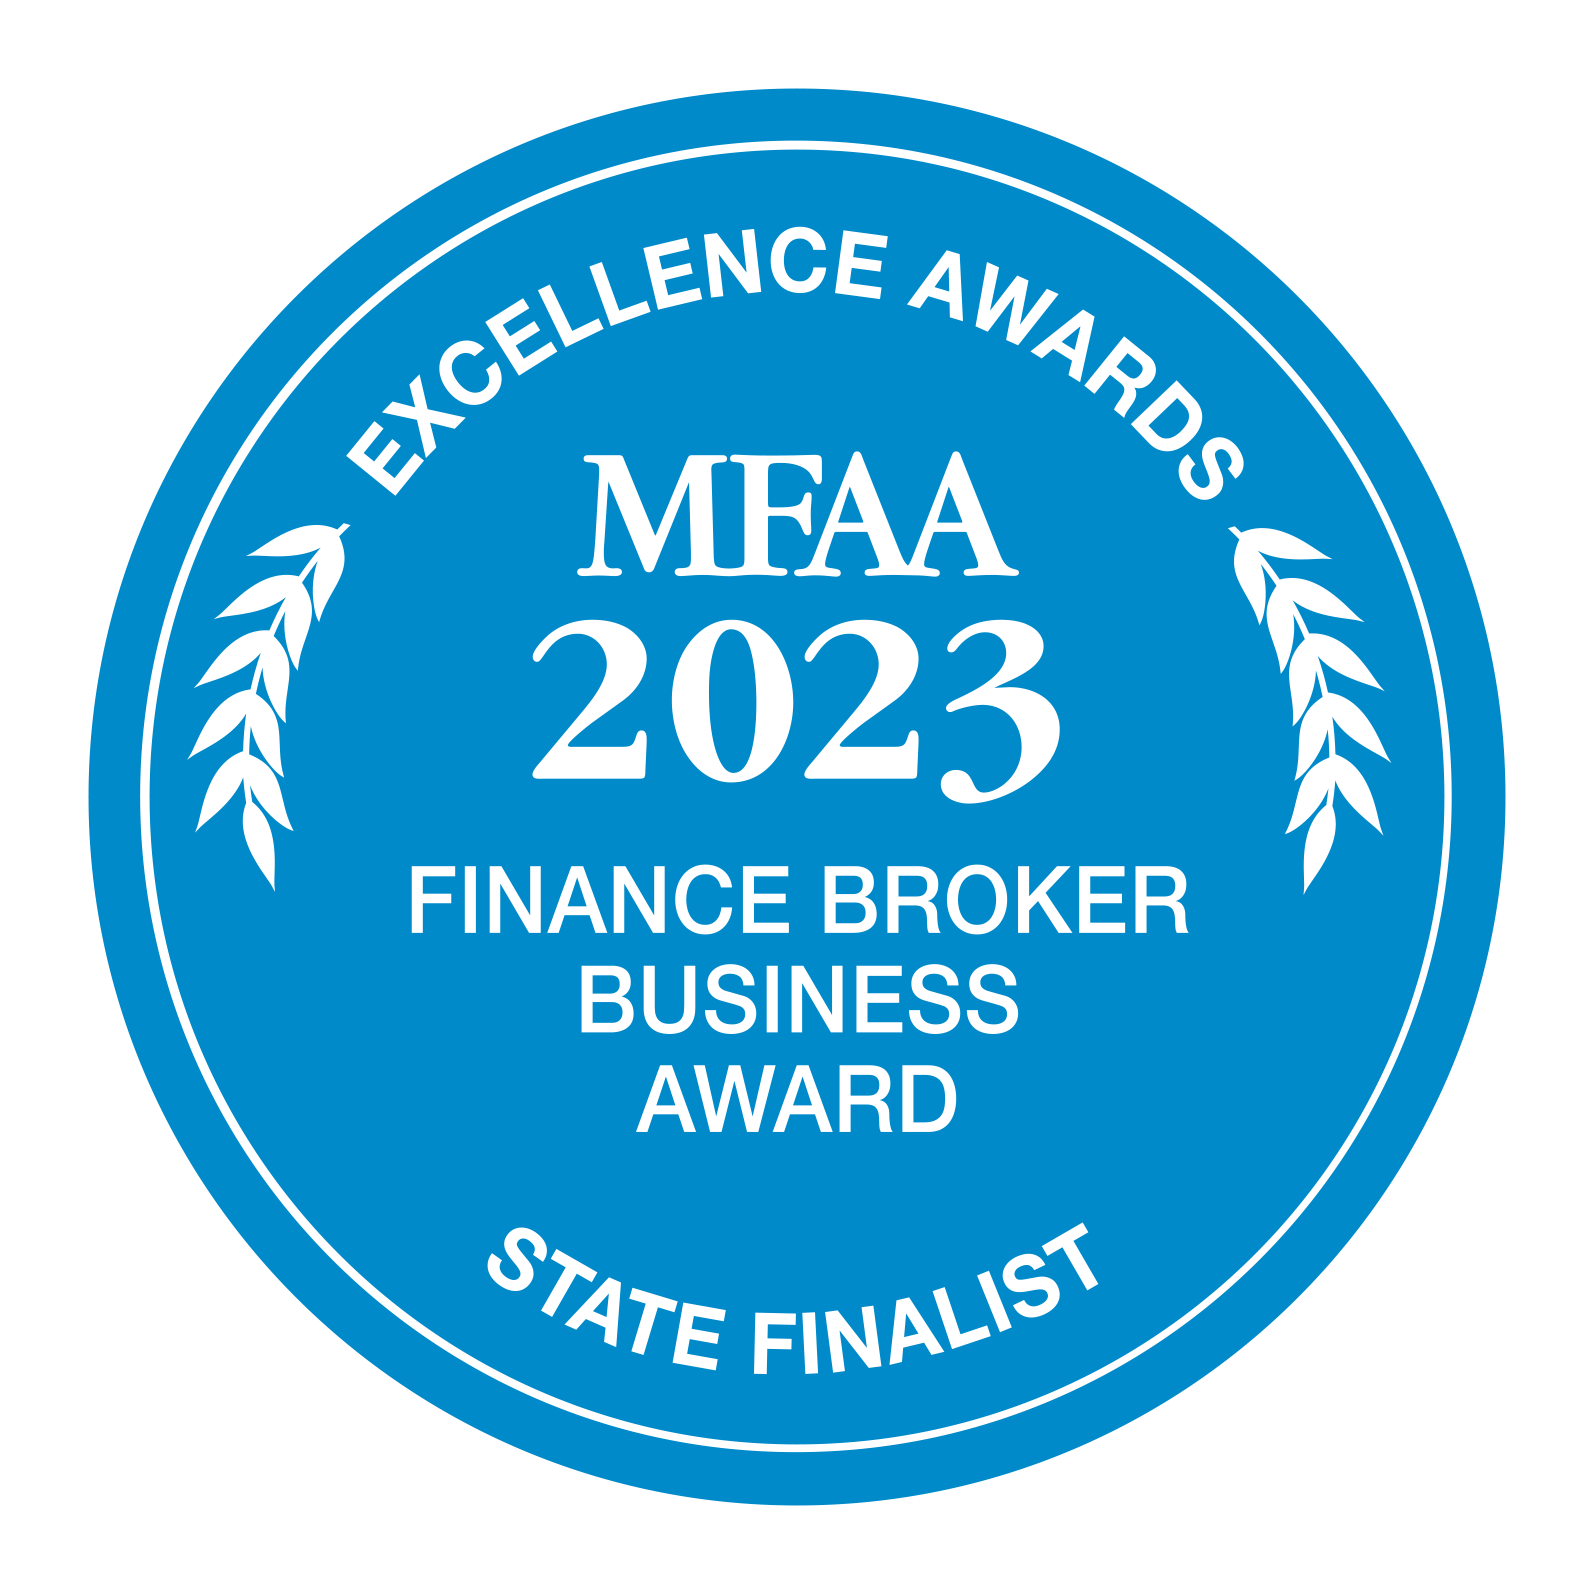 Mfaa 2023 State Finalist Rev Rgb Fin Broker Business